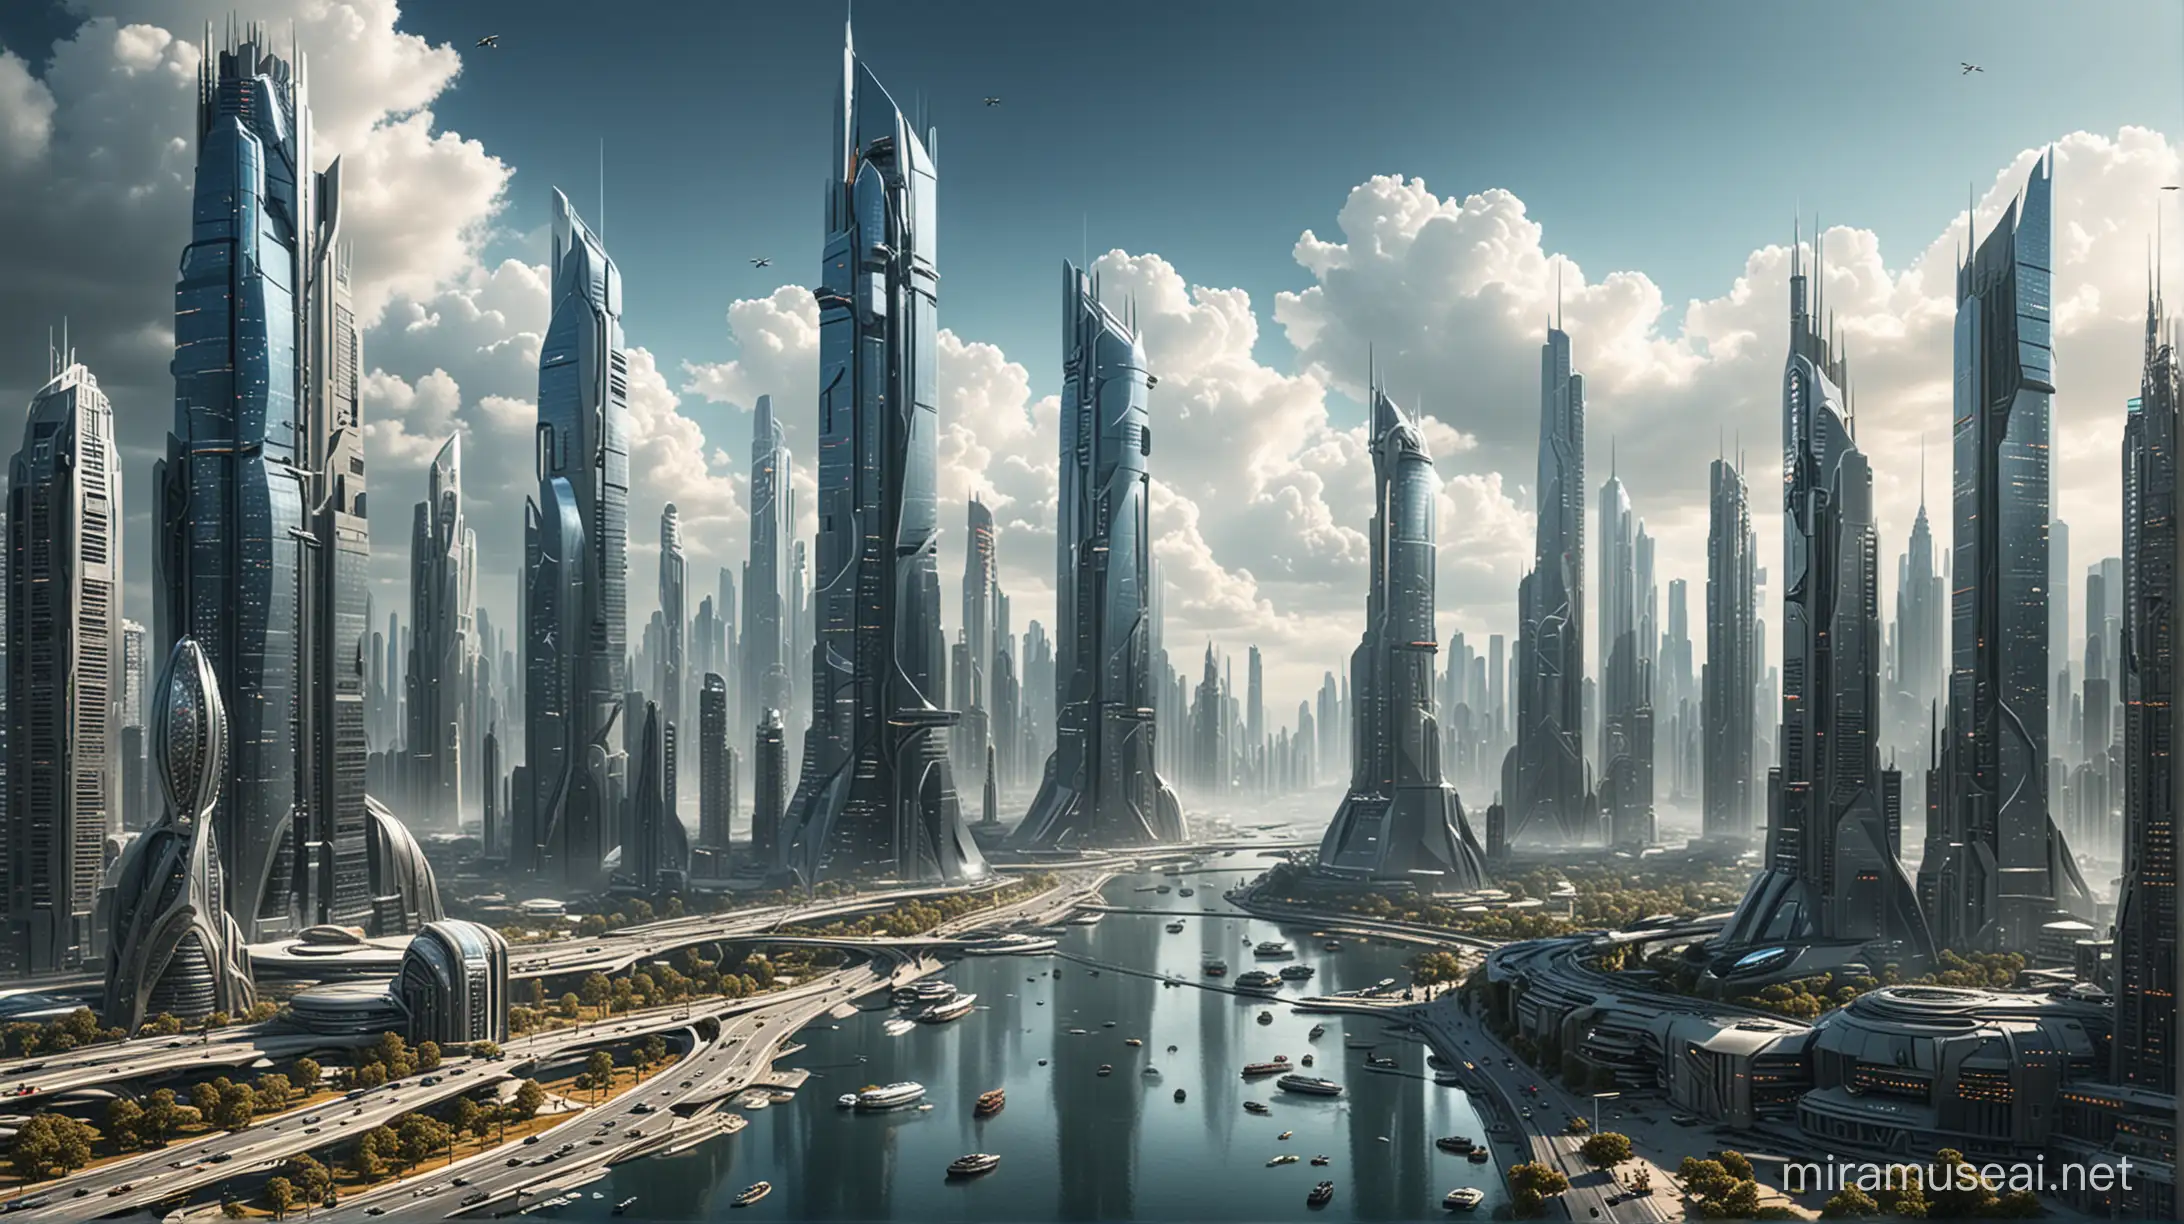 Futuristic Cityscape with Sky Scrapers at Twilight